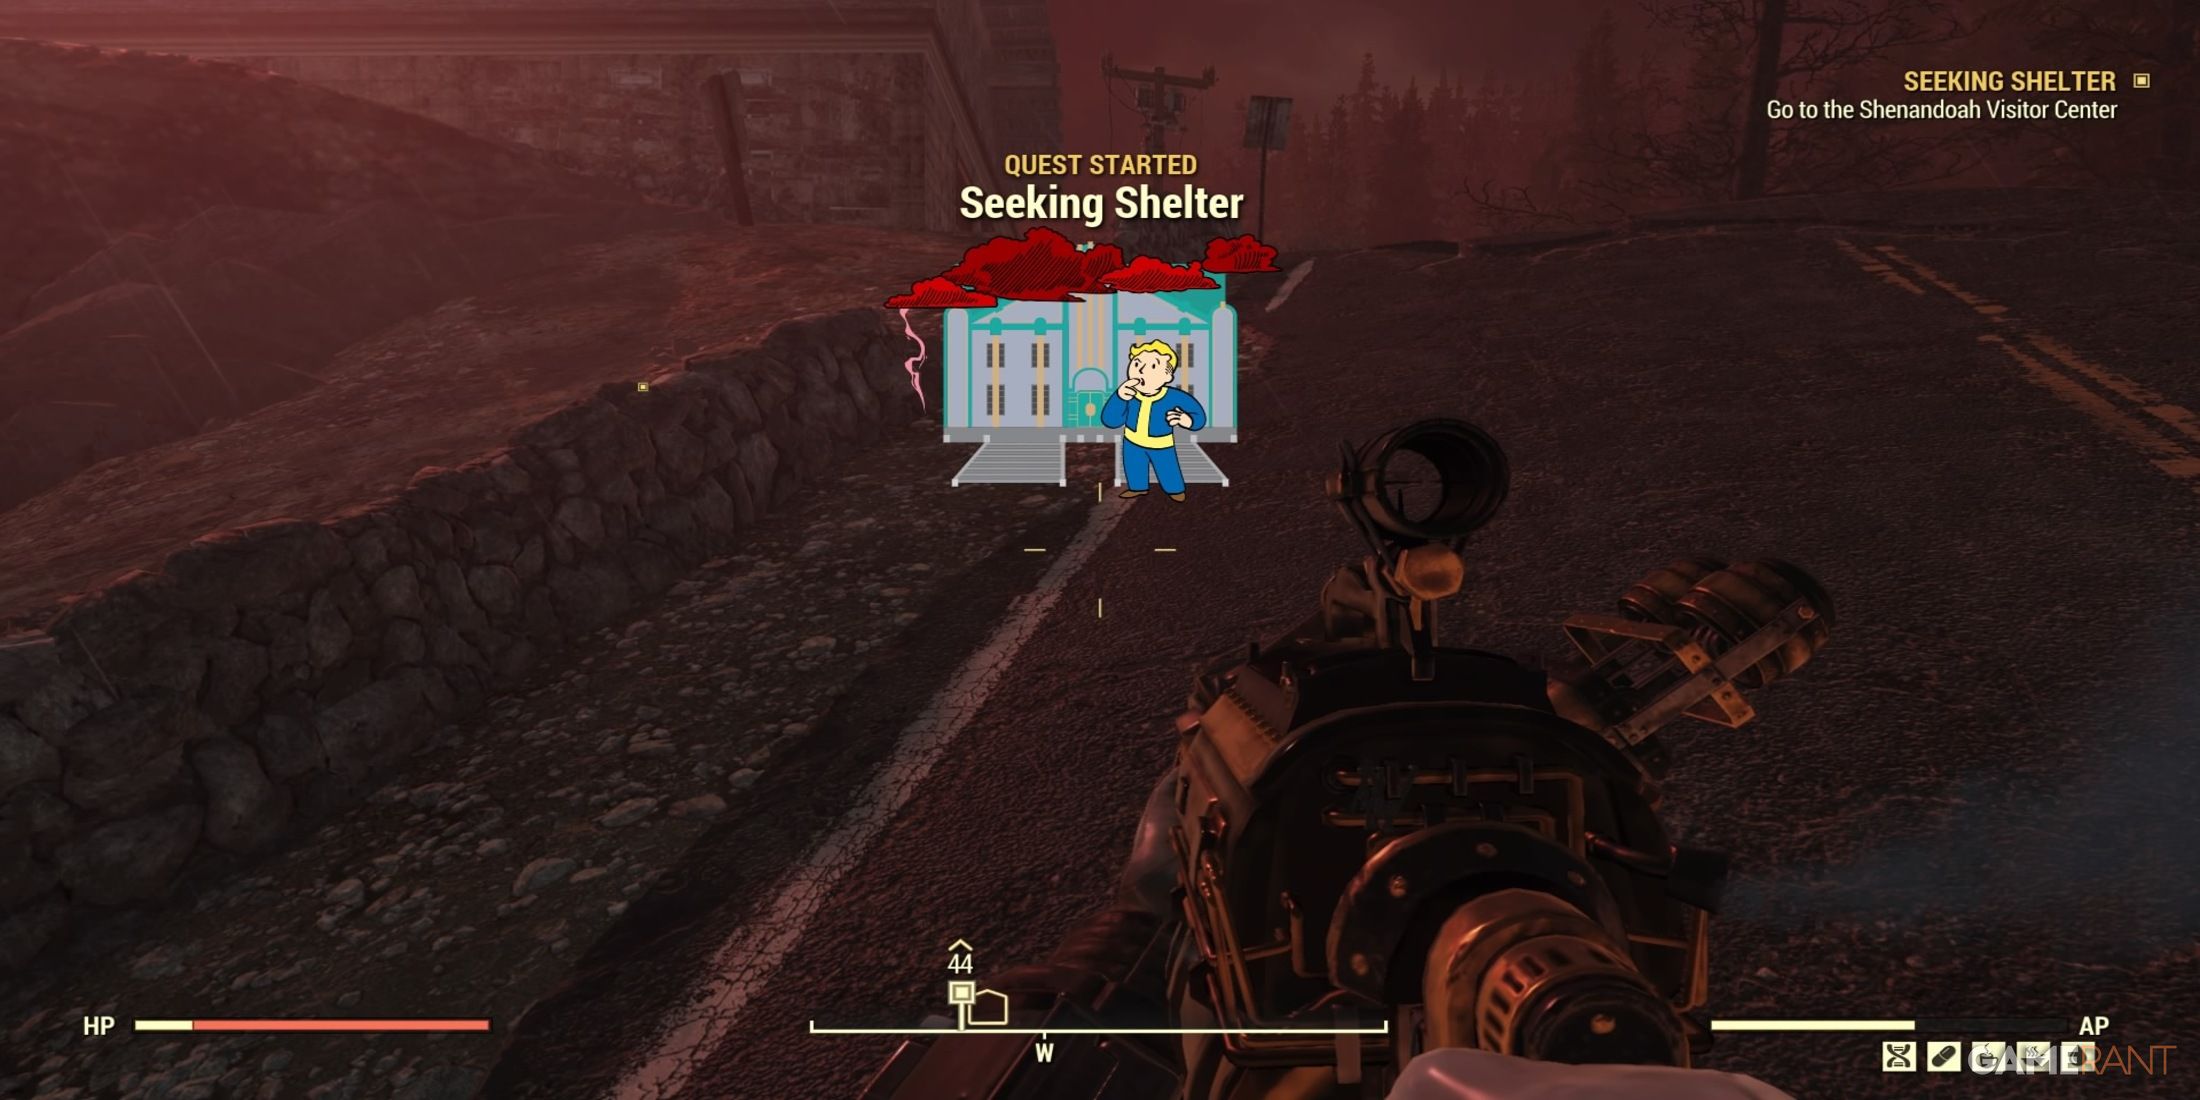 Seeking Shelter Quest in Fallout 76